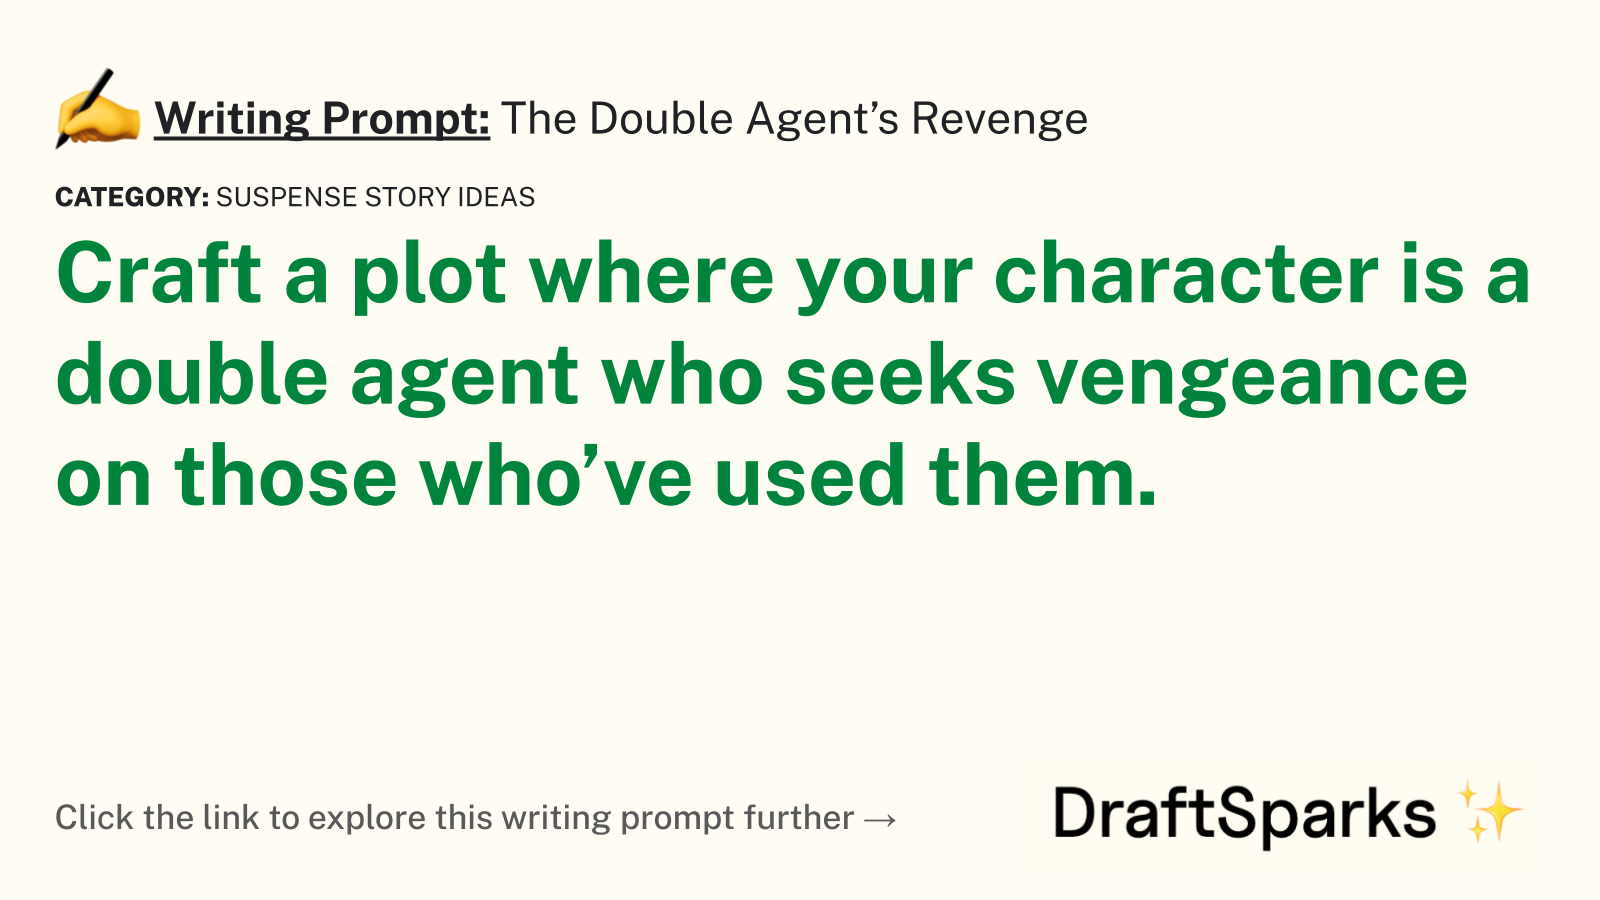 The Double Agent’s Revenge